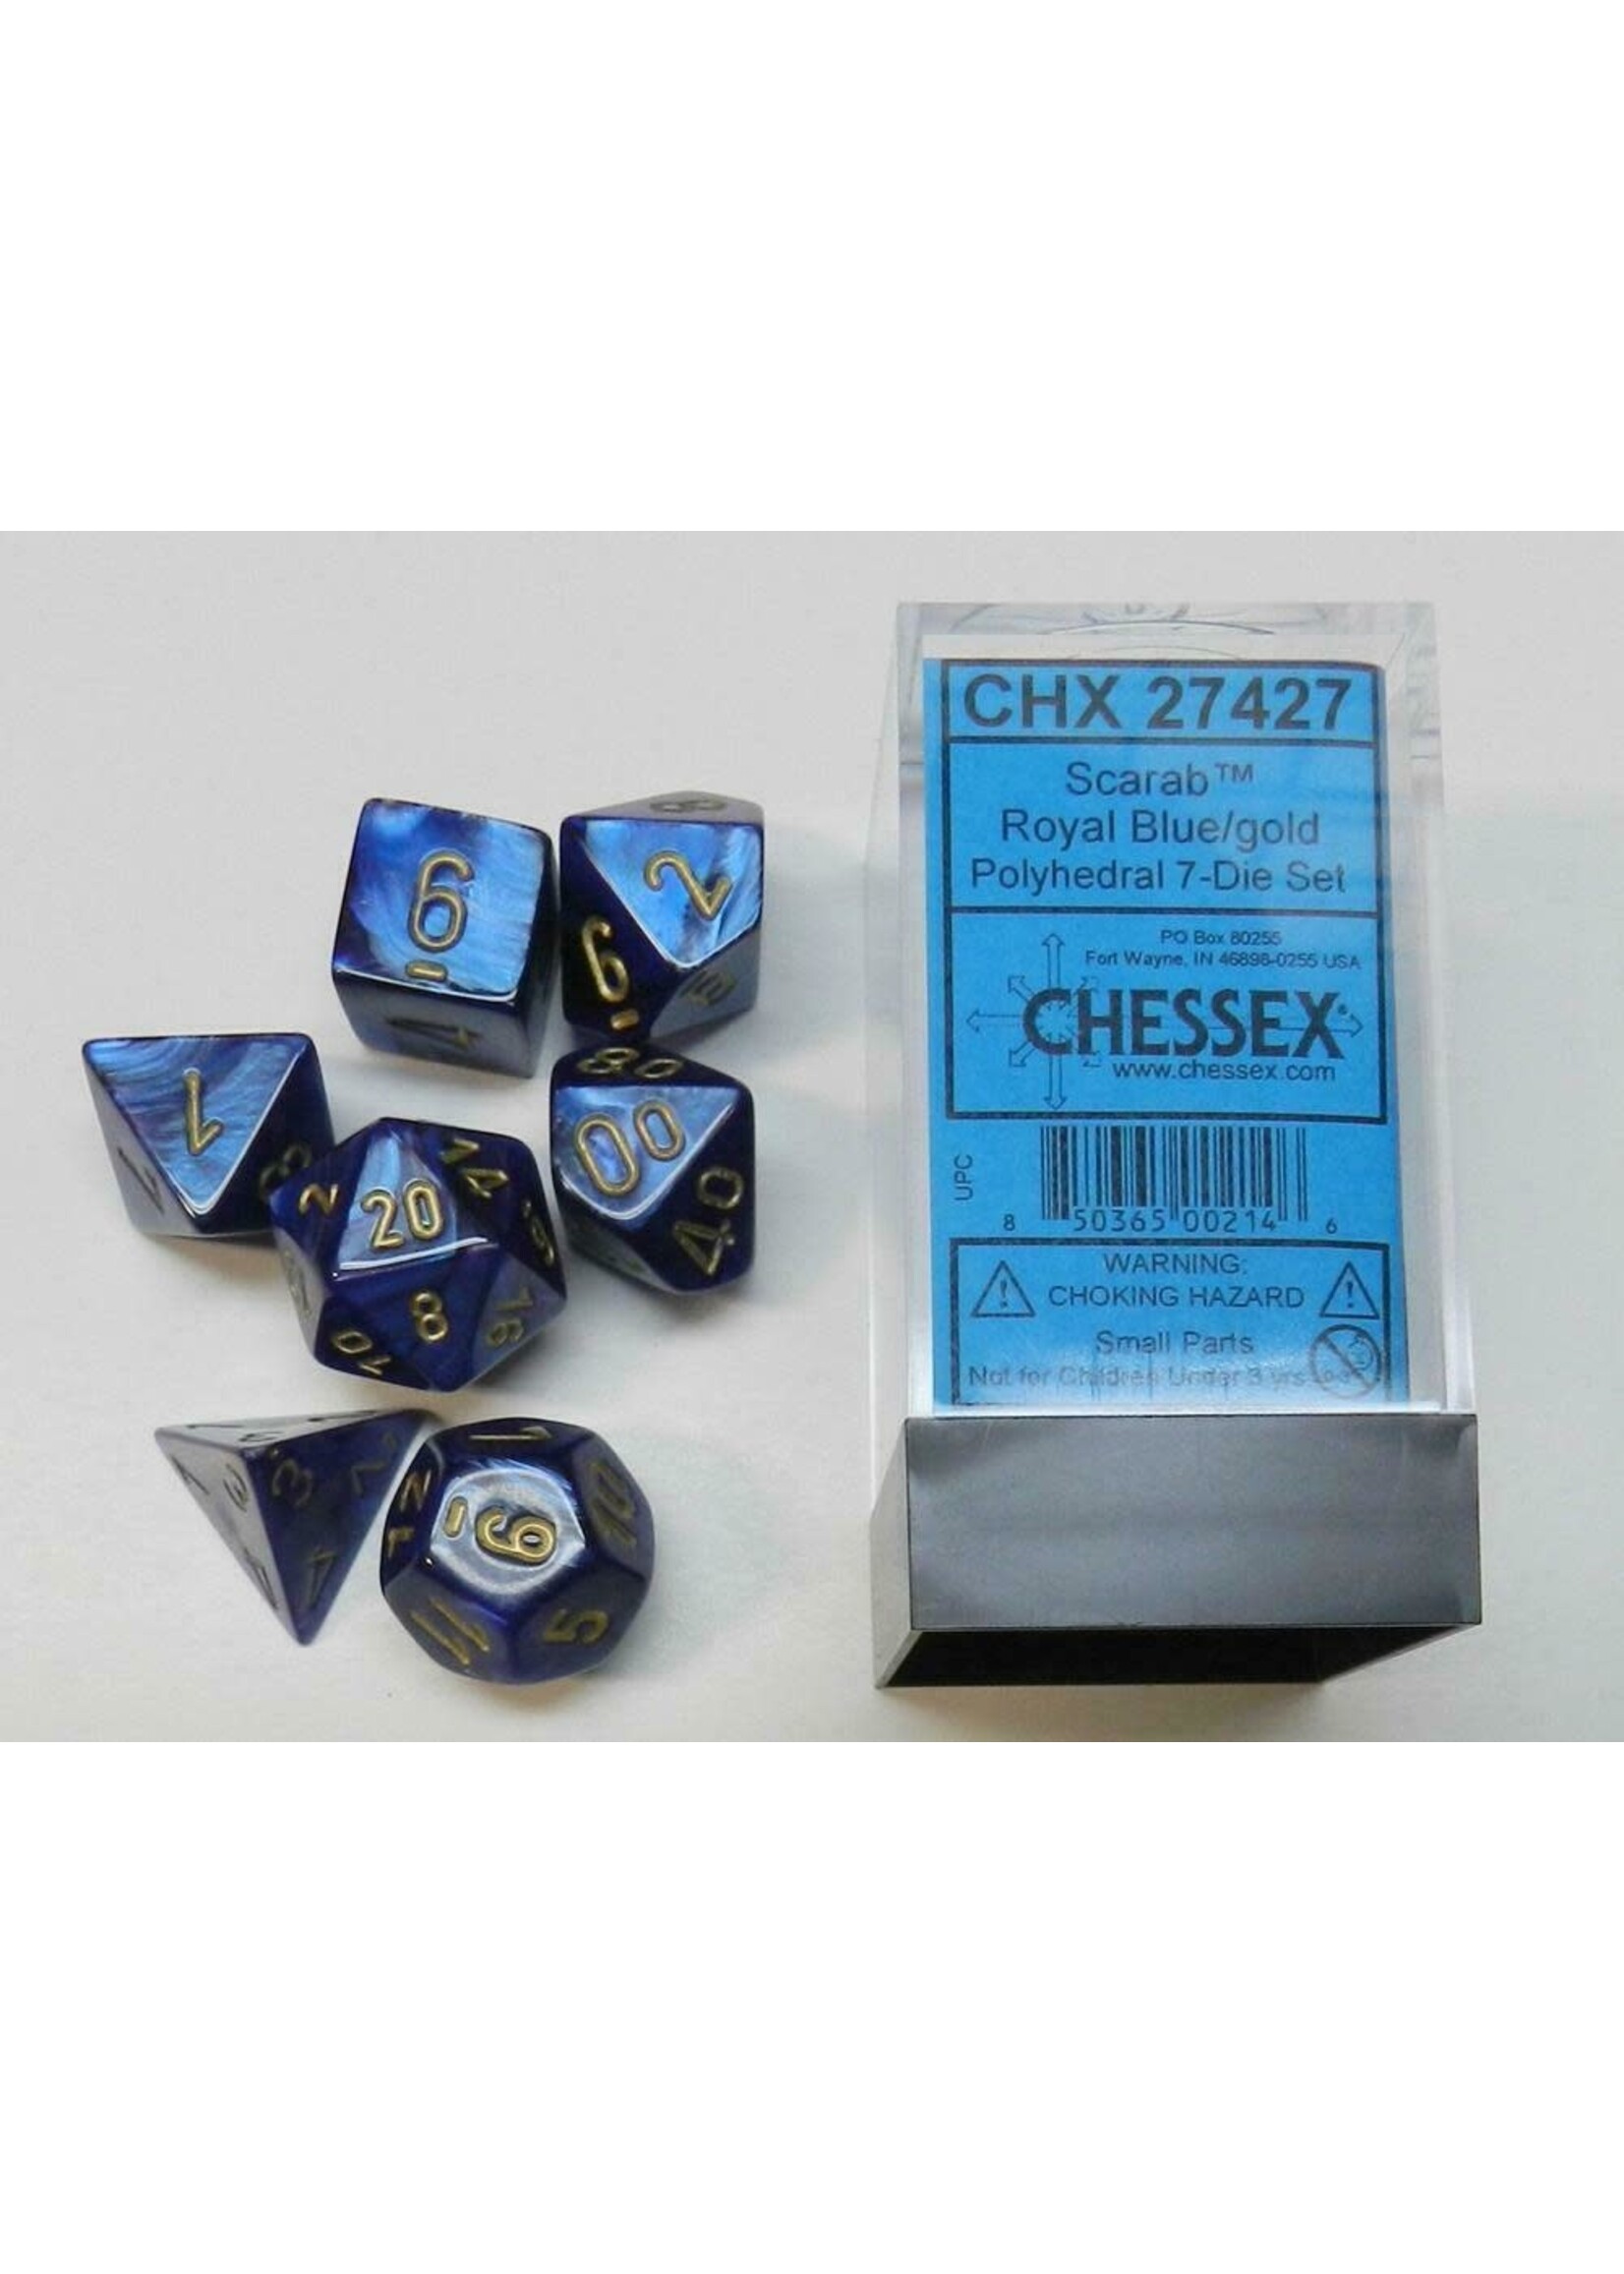 Chessex 7-Die Set Scarab Royal Blue/Gold